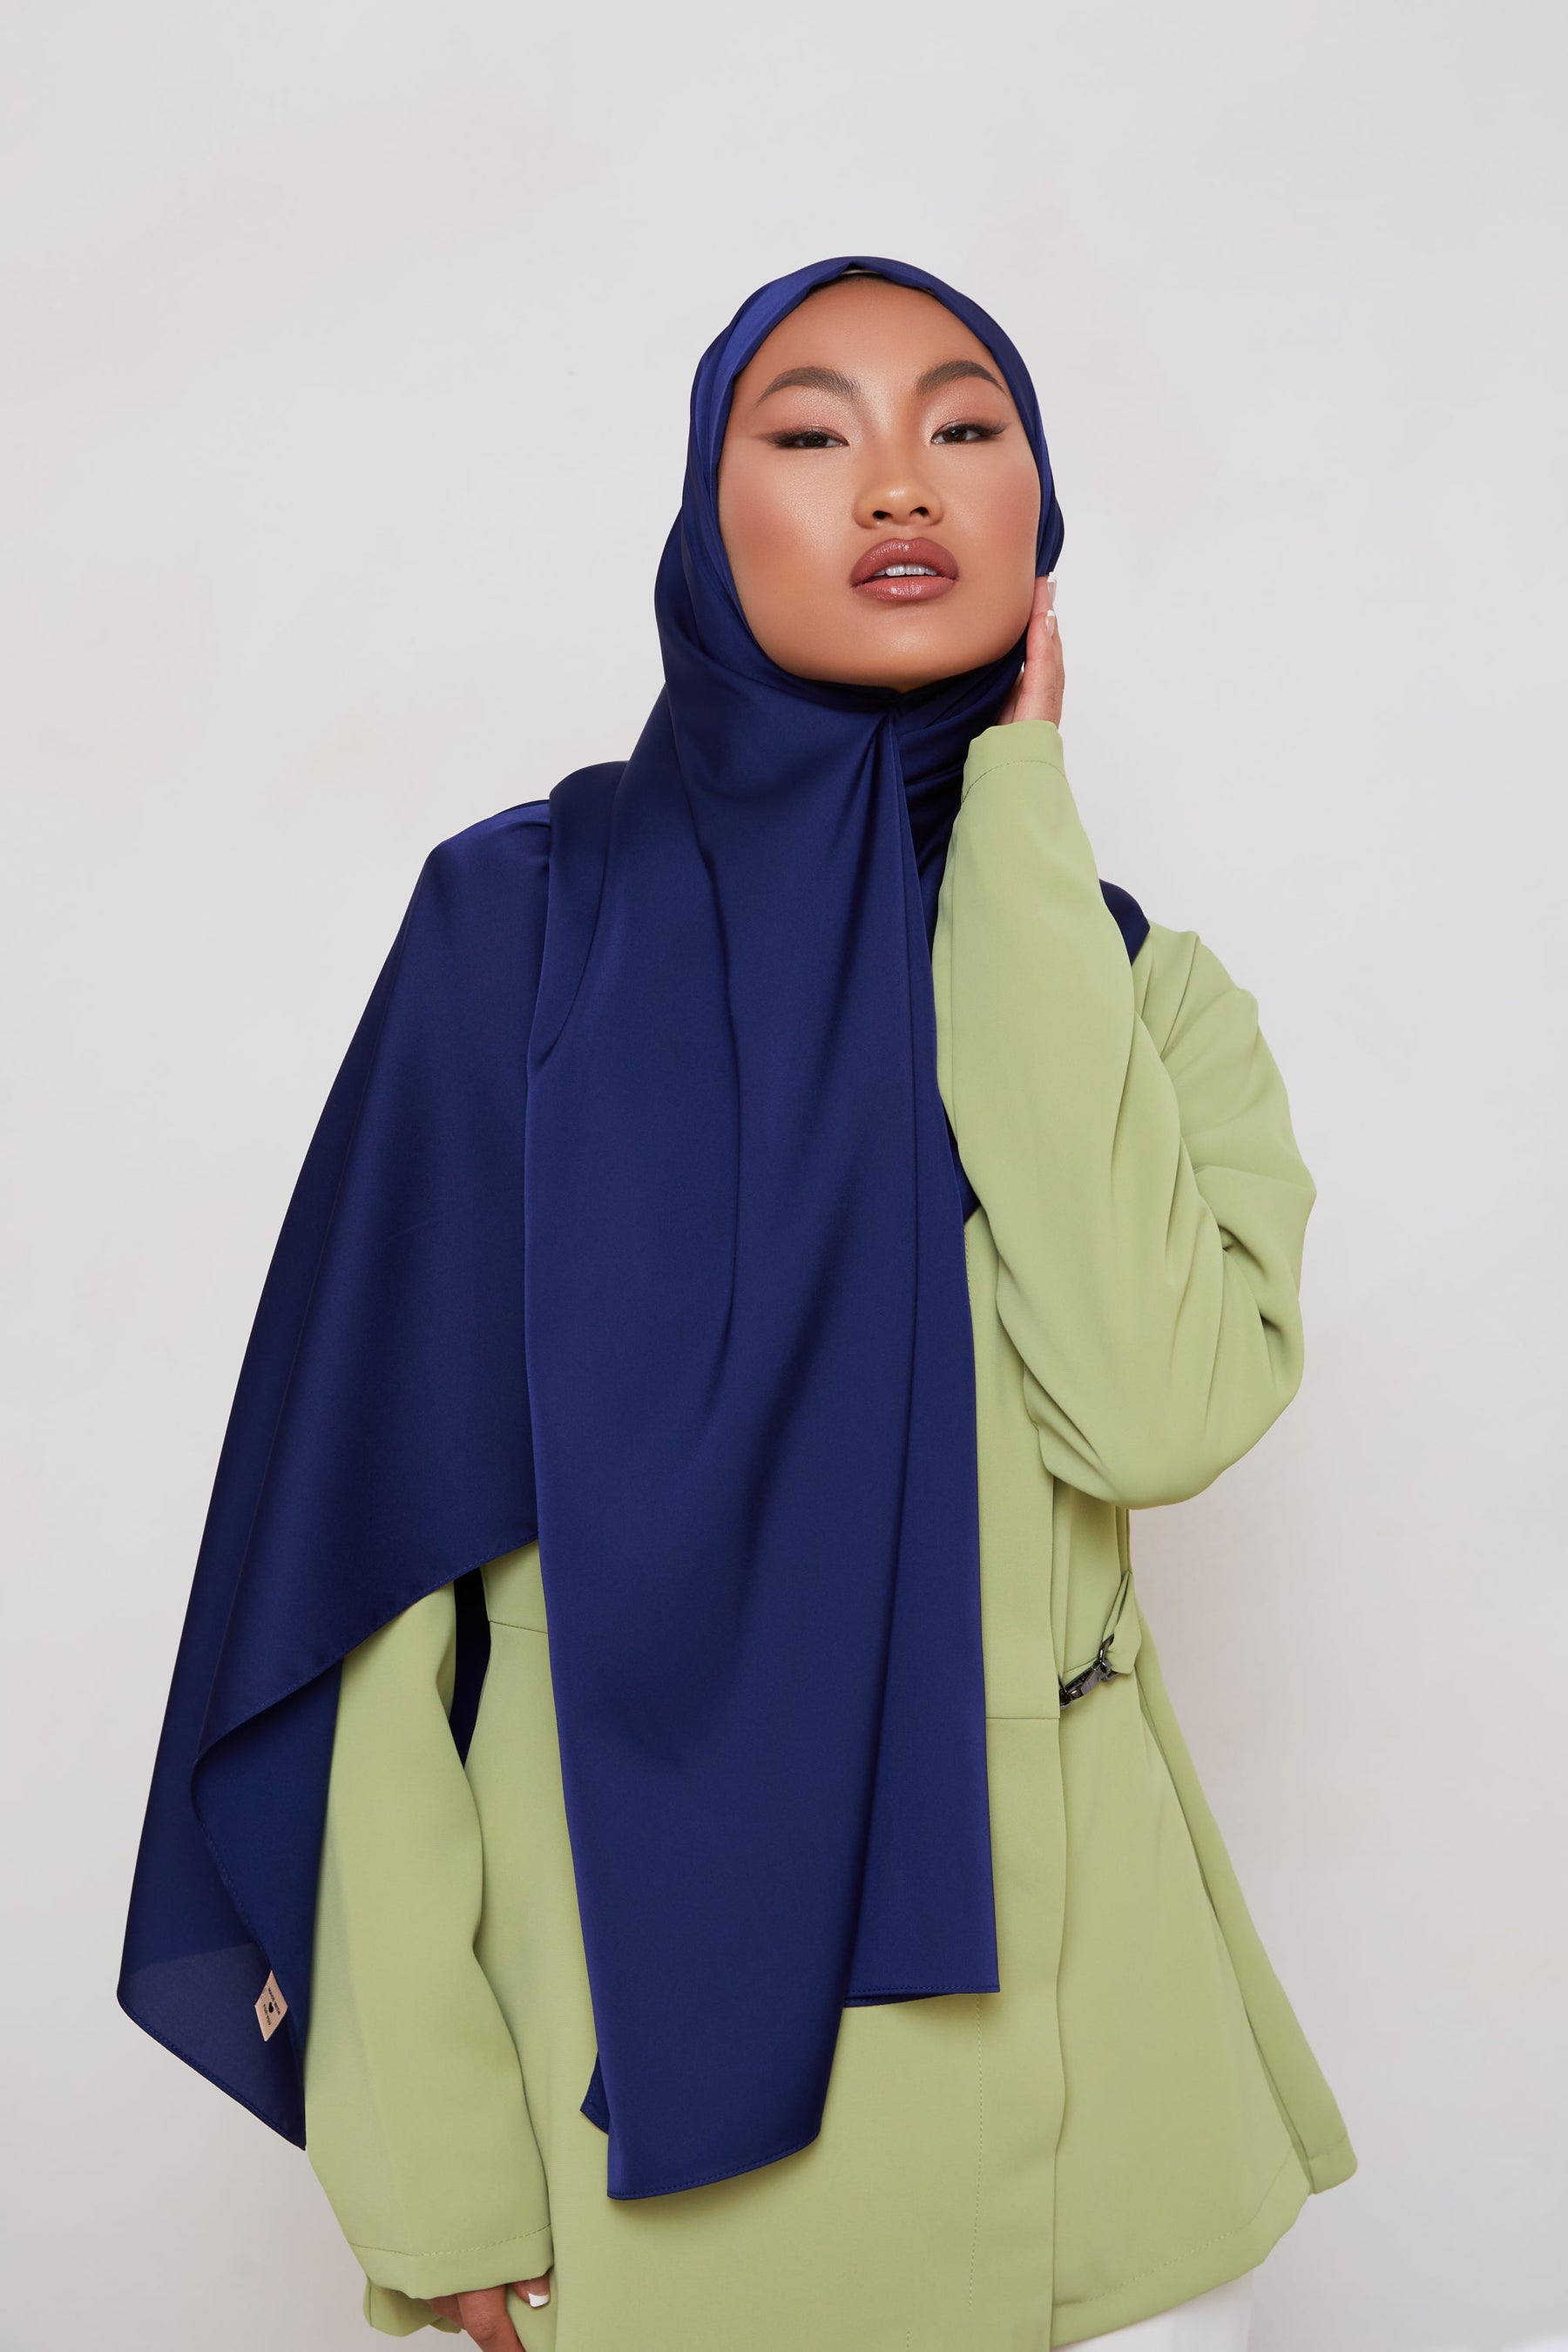 SMOOTH Satin Hijab - Classic Veiled Collection 